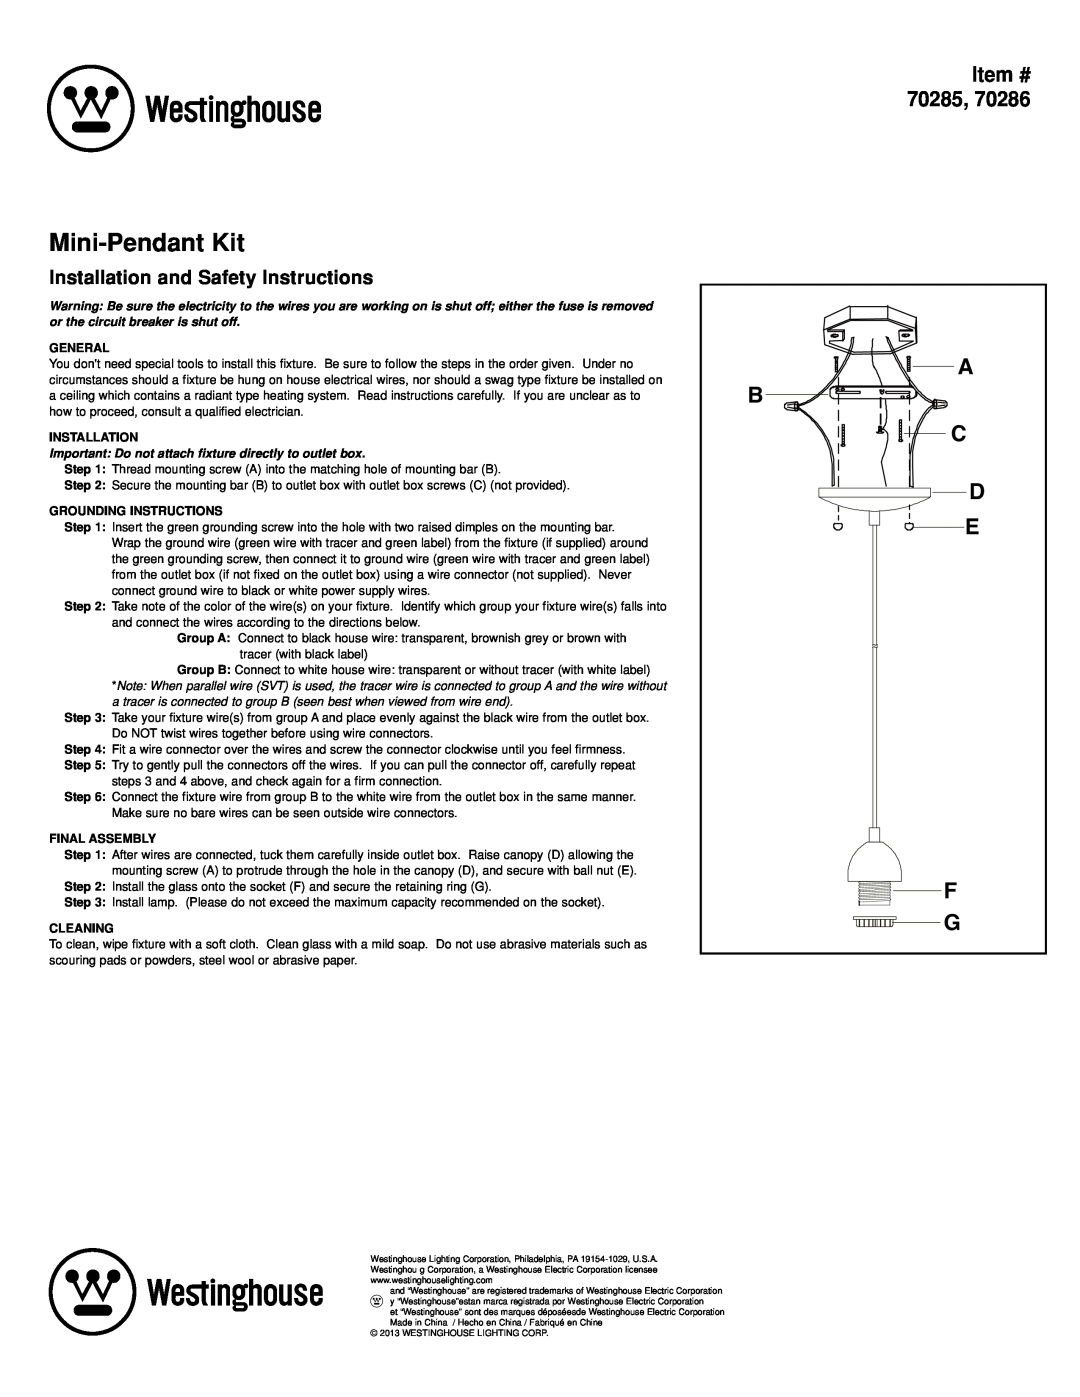 Westinghouse 70286 manual Mini-PendantKit, Installation and Safety Instructions, Item #, A B C D E F G 